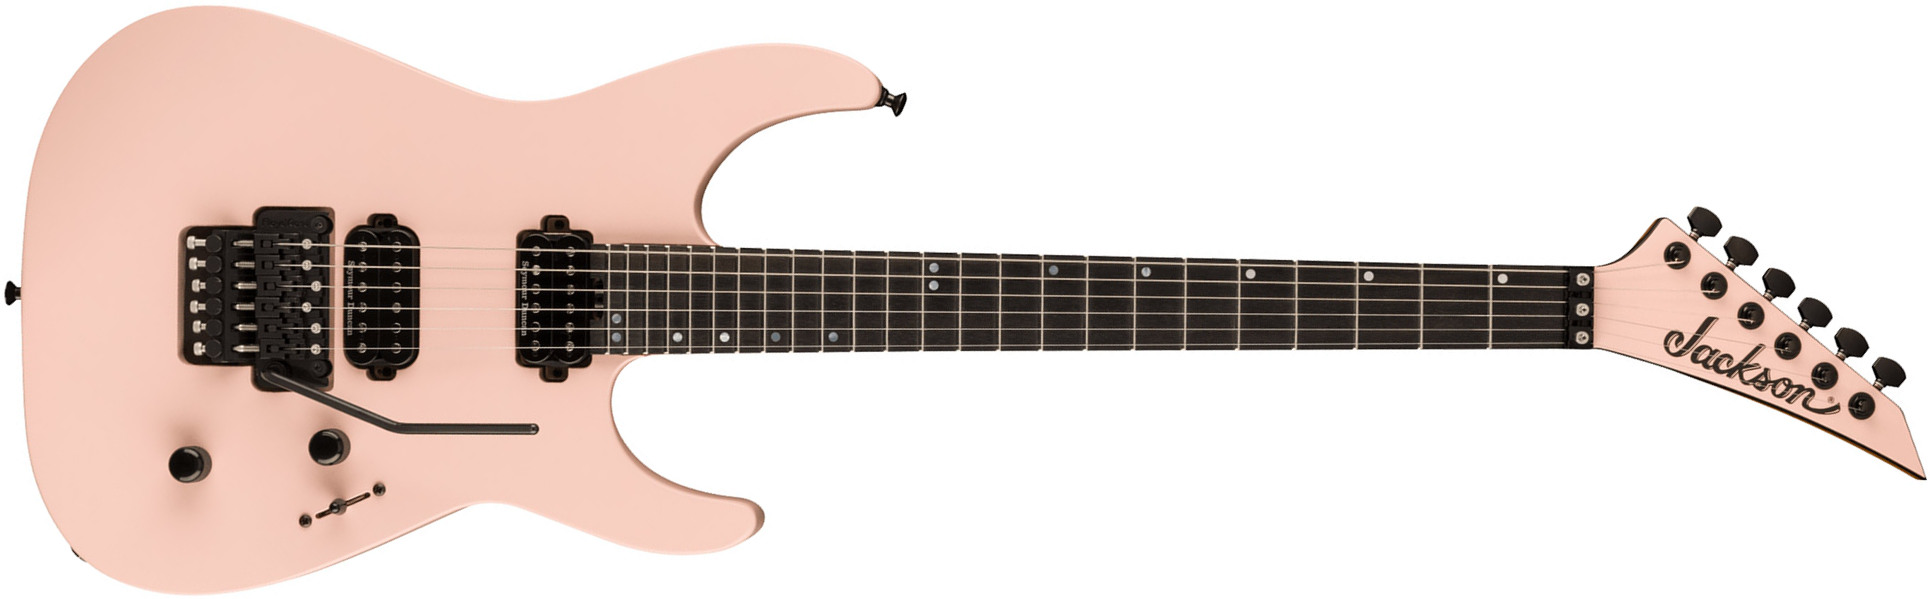 Jackson American Virtuoso Usa 2h Seymour Duncan Fr Eb - Satin Shell Pink - Str shape electric guitar - Main picture